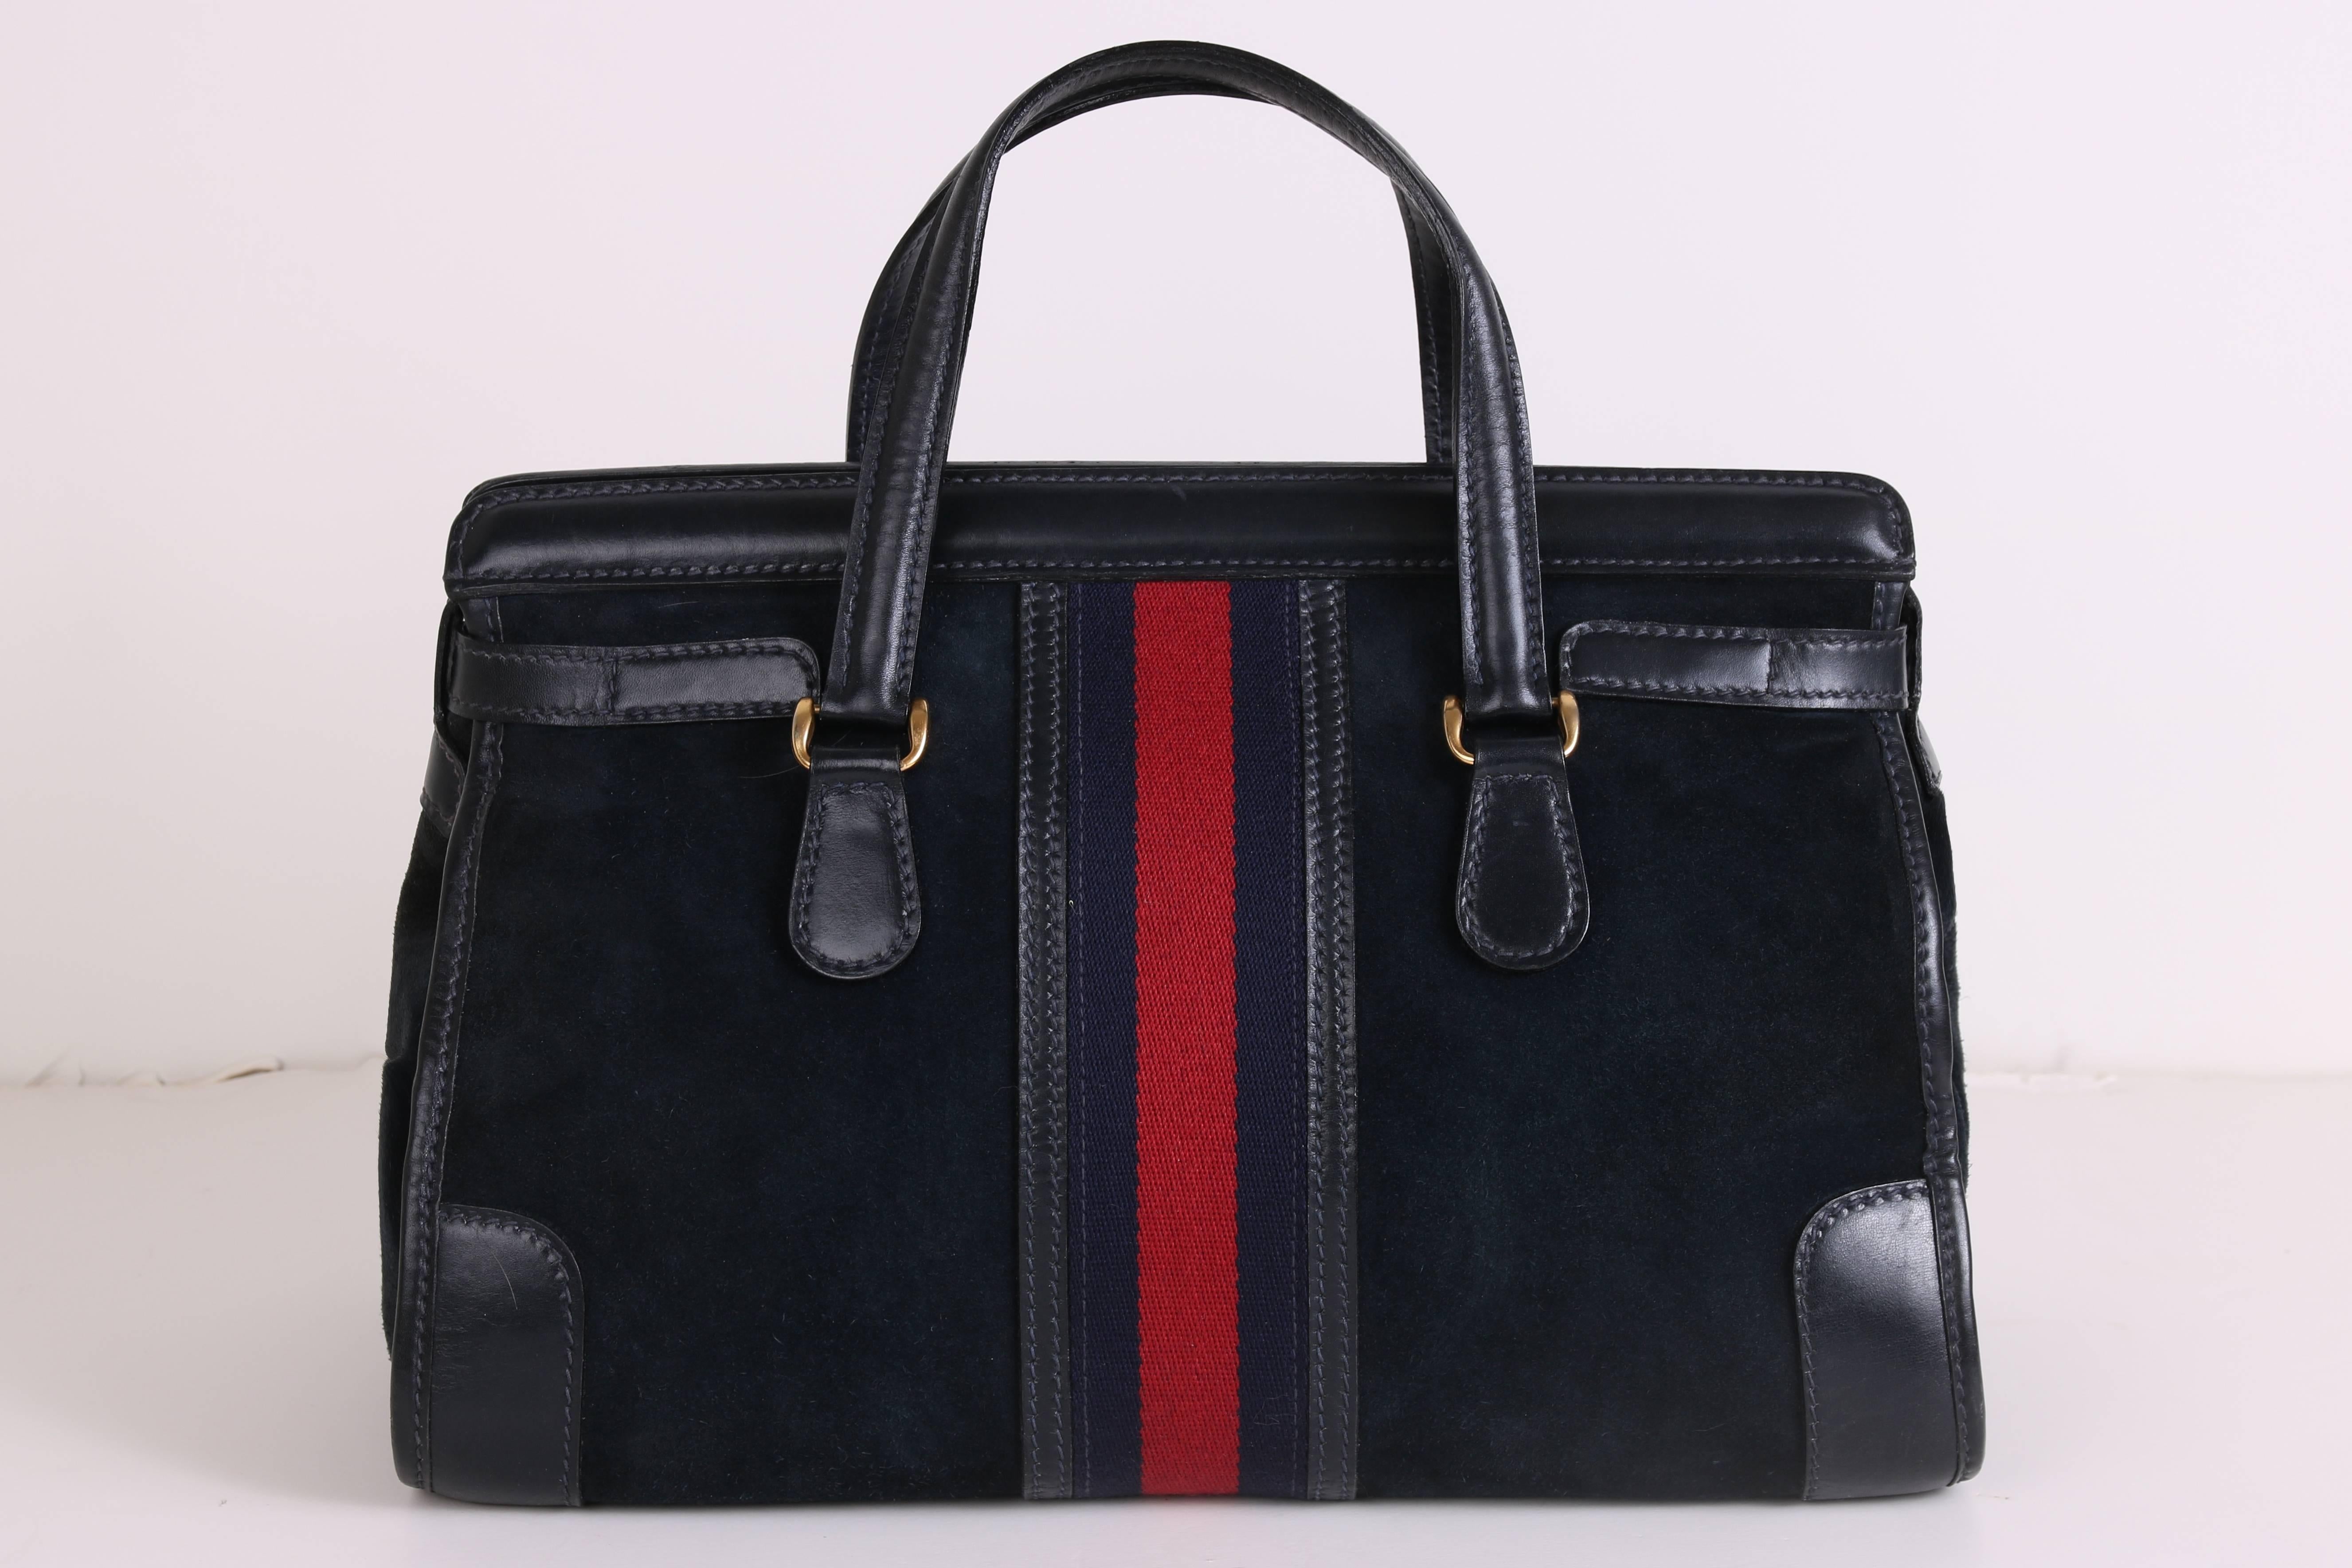 Black Rare 1970s Gucci Navy Blue Suede Doctor's Bag Handbag Tote w/Gucci Racer Stripe